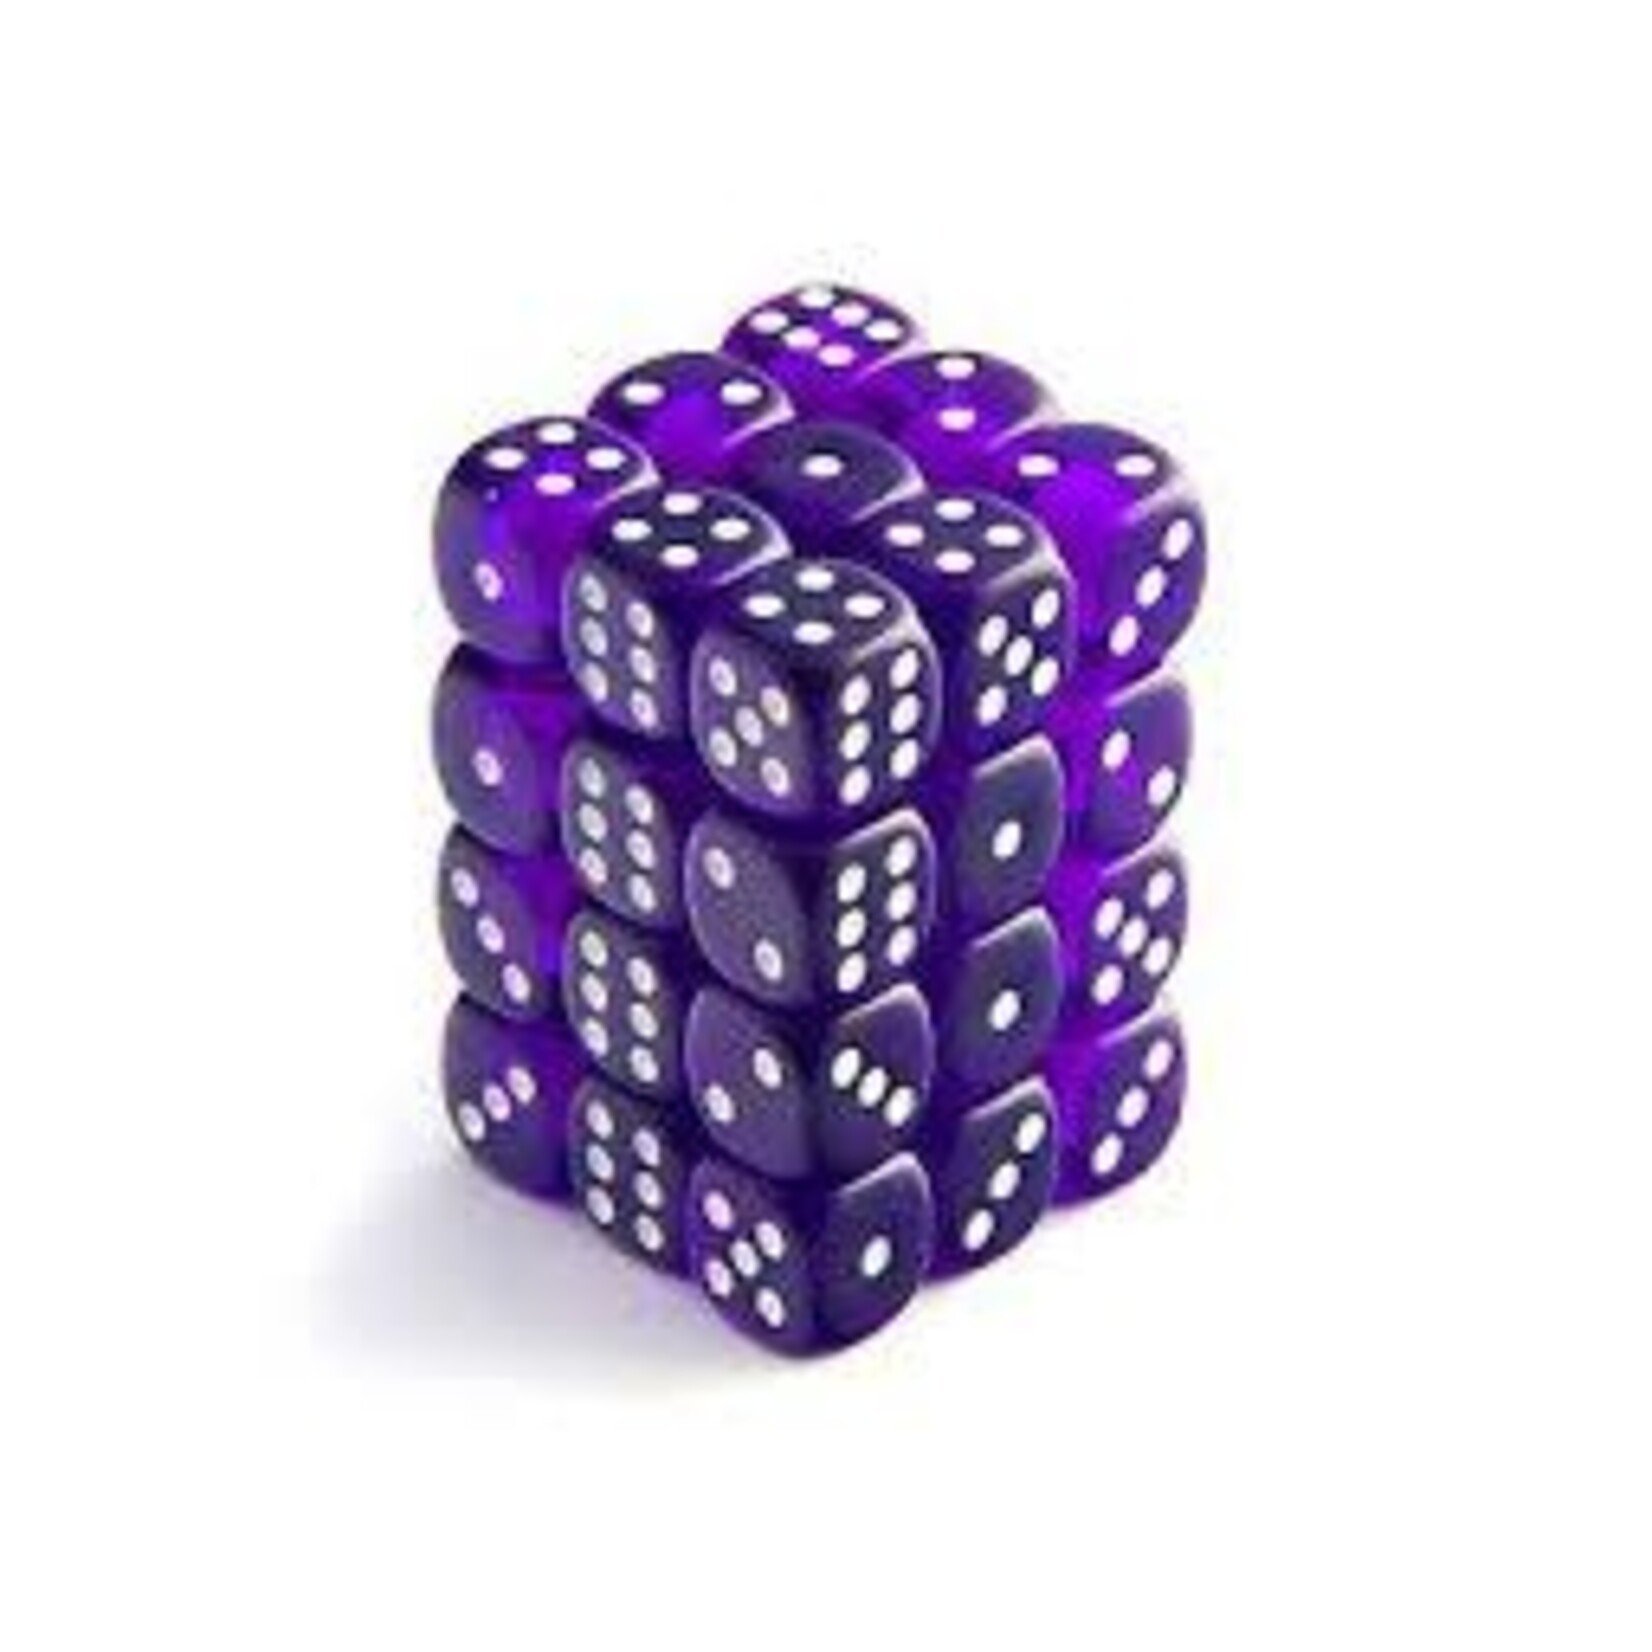 Chessex Translucent Purple/white 12mm d6 Dice Block (36 dice)